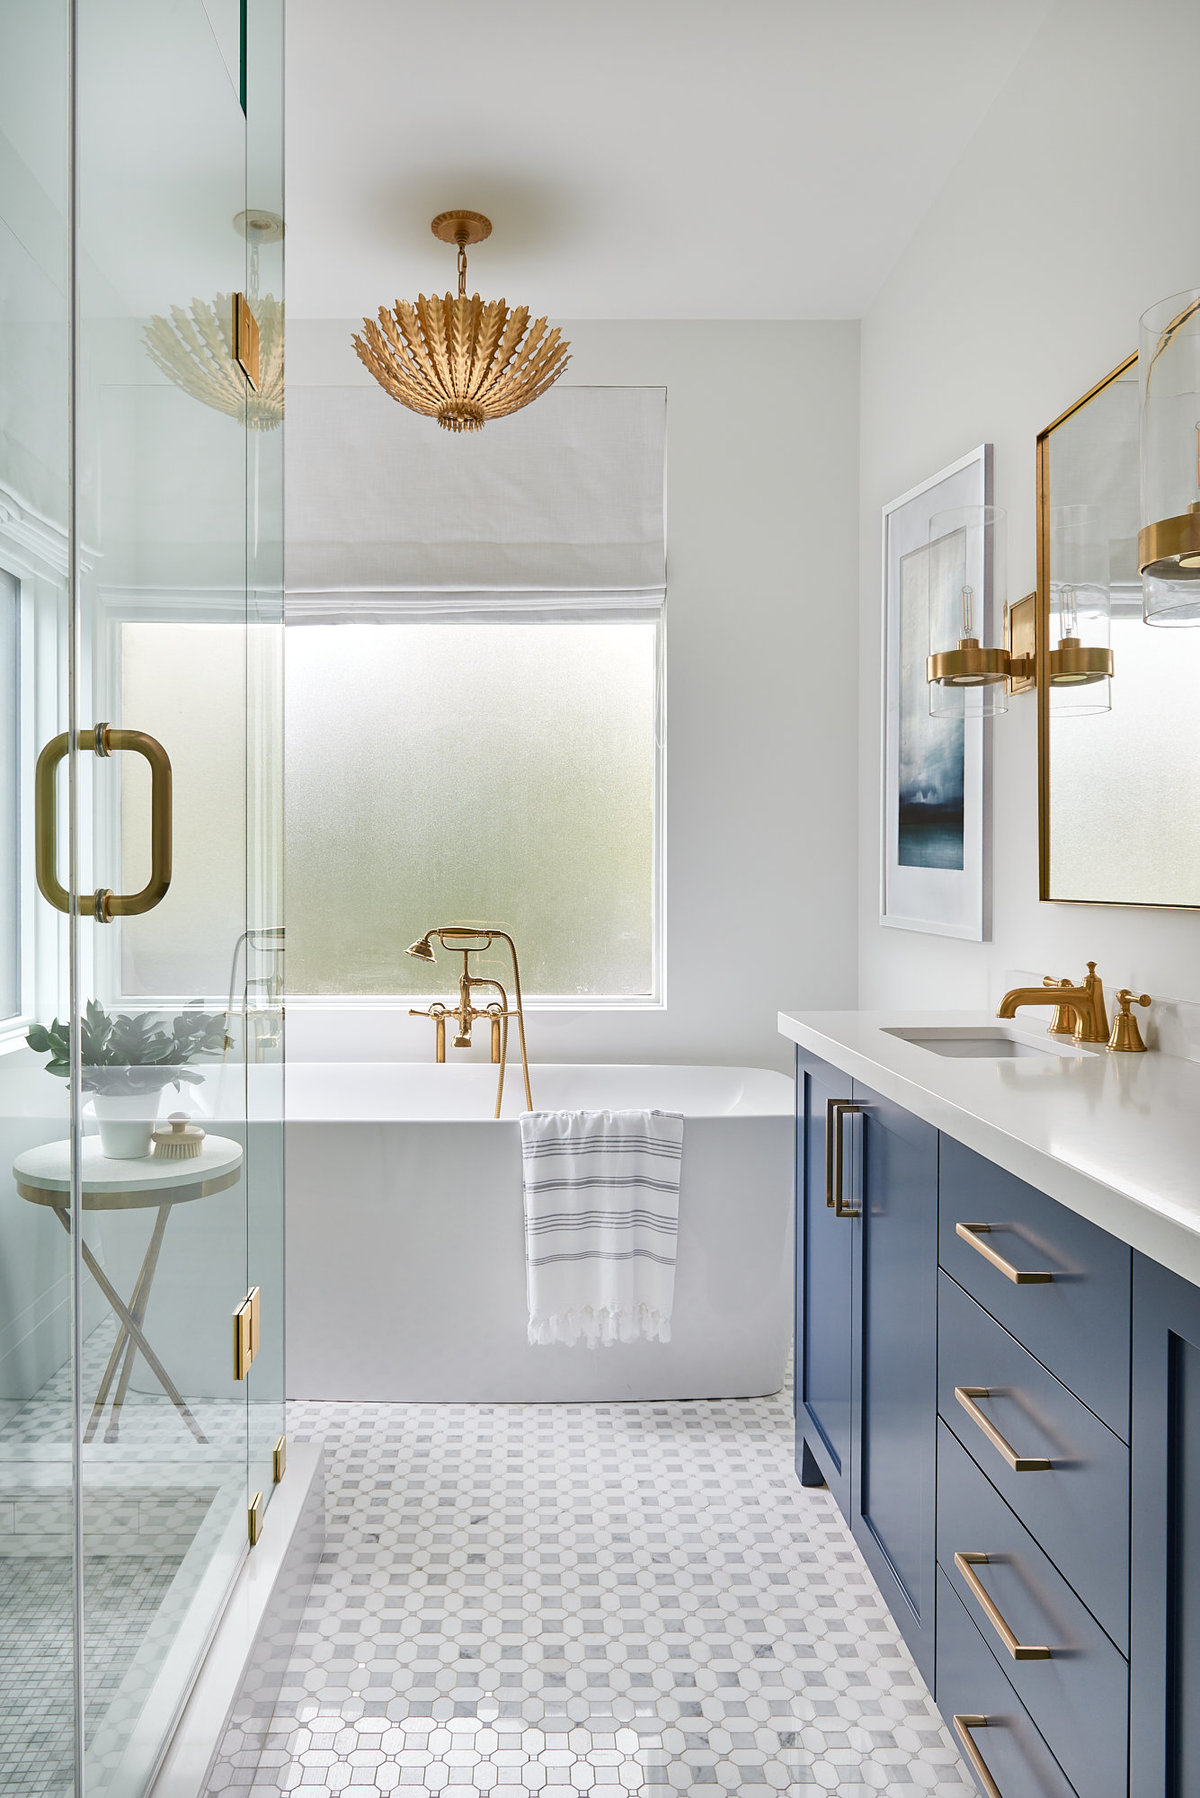 Toronto bathroom designed with marble floor, custom navy vanity, and gold interior fixtures